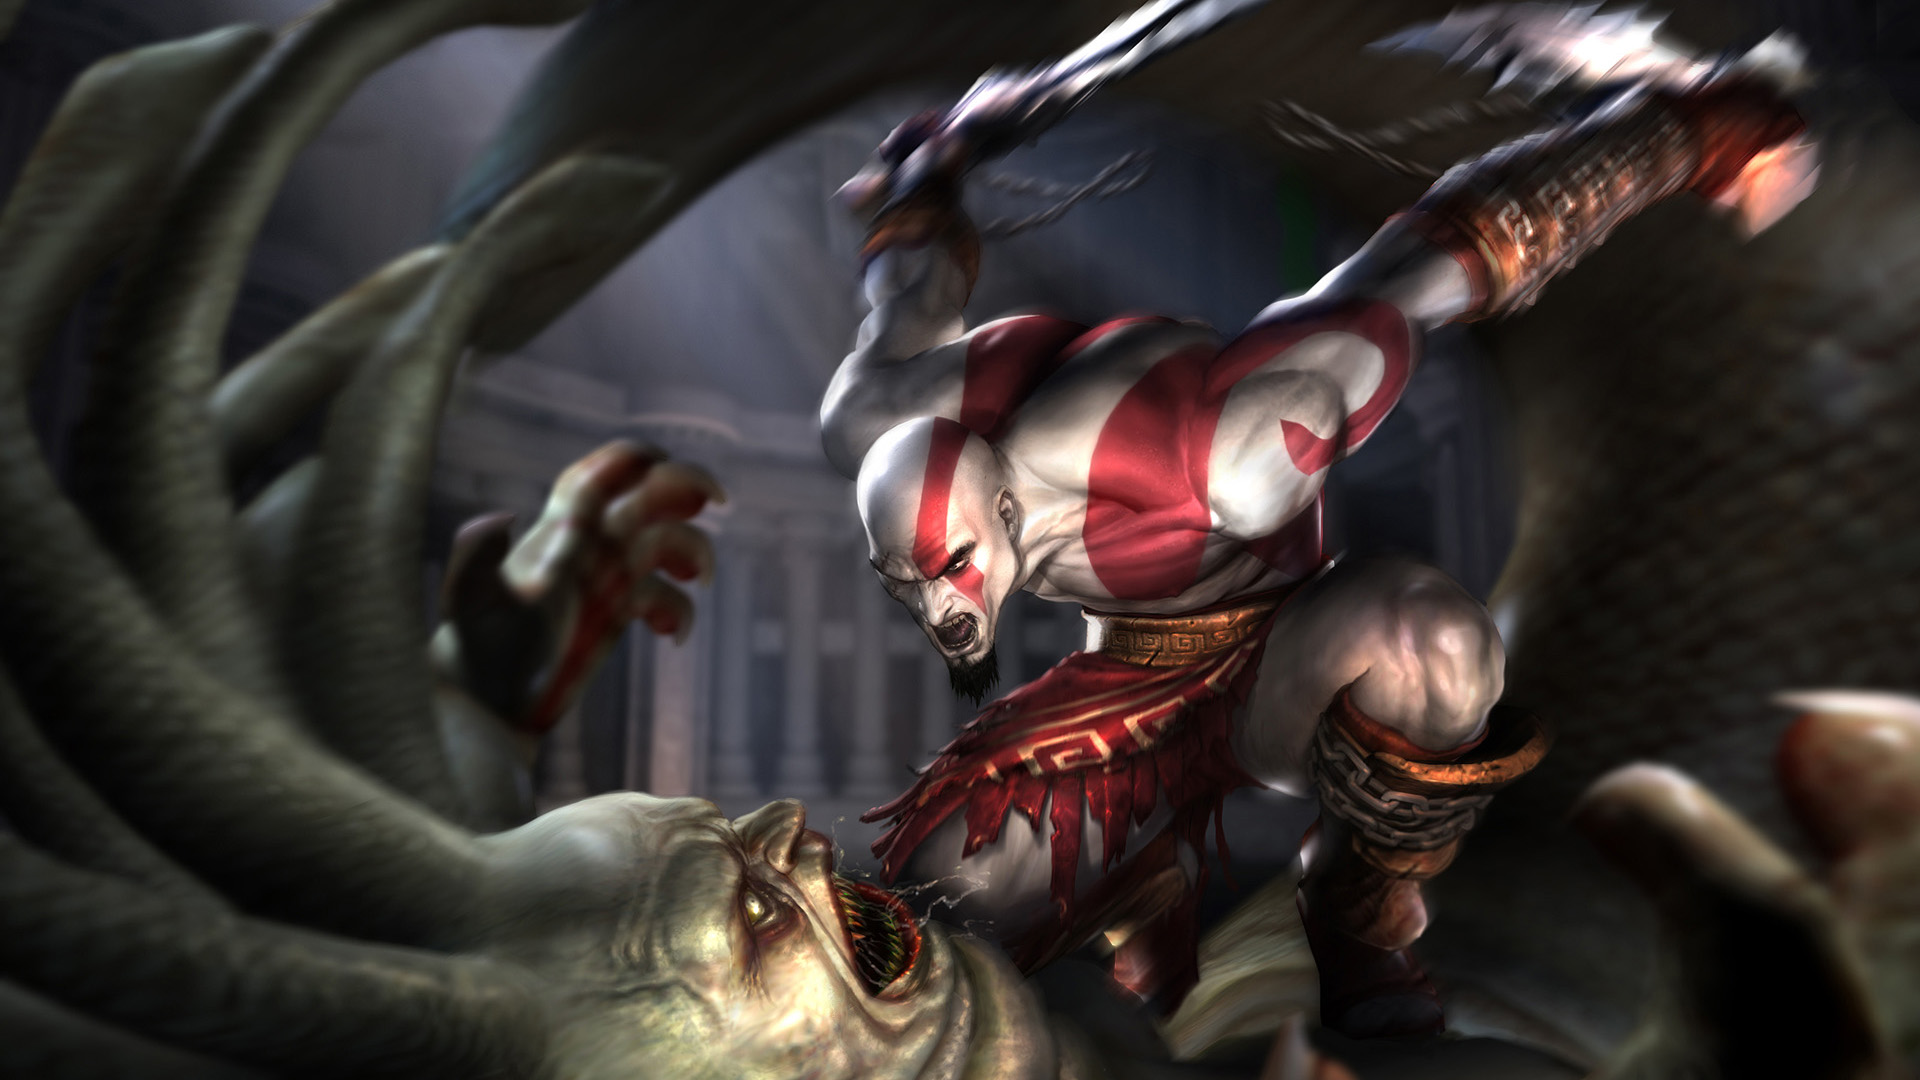 Kratos, the imposing God of War, captured in a high-definition desktop wallpaper.